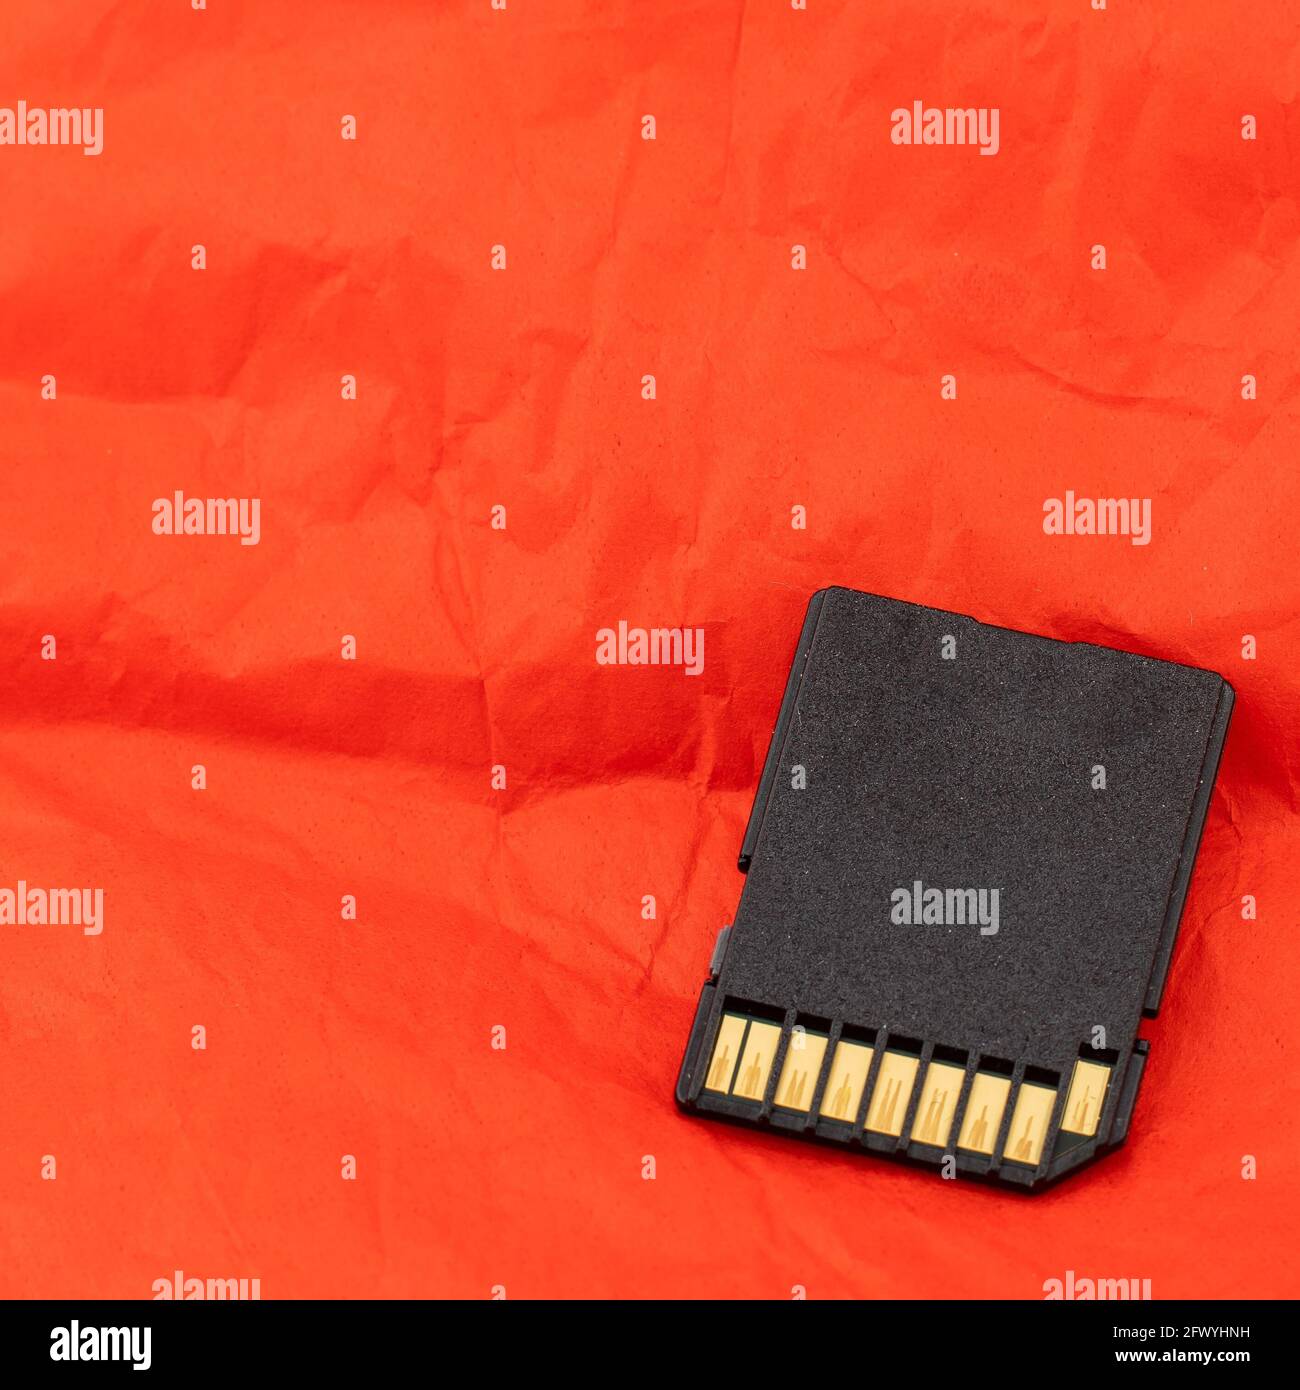 sd card, storage device, camera device, on orange background Stock Photo